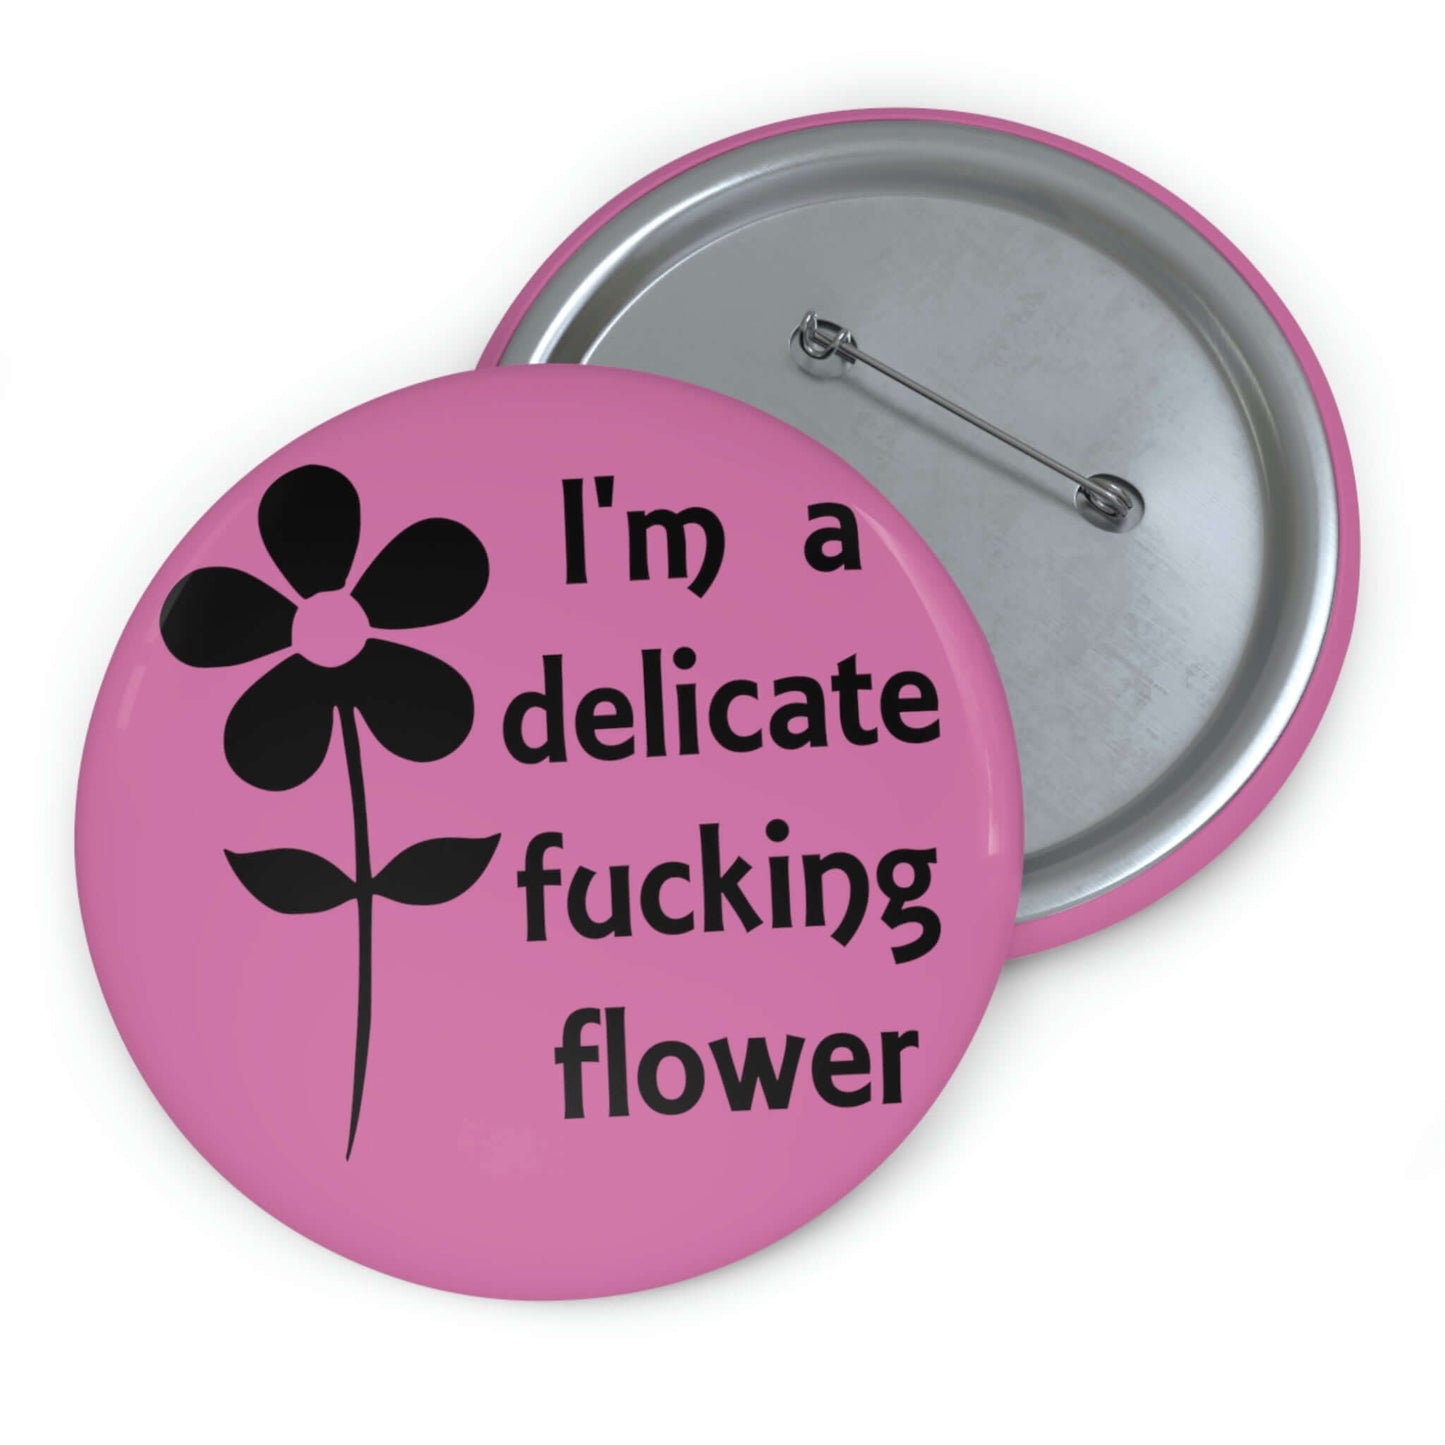 Delicate flower pinback button